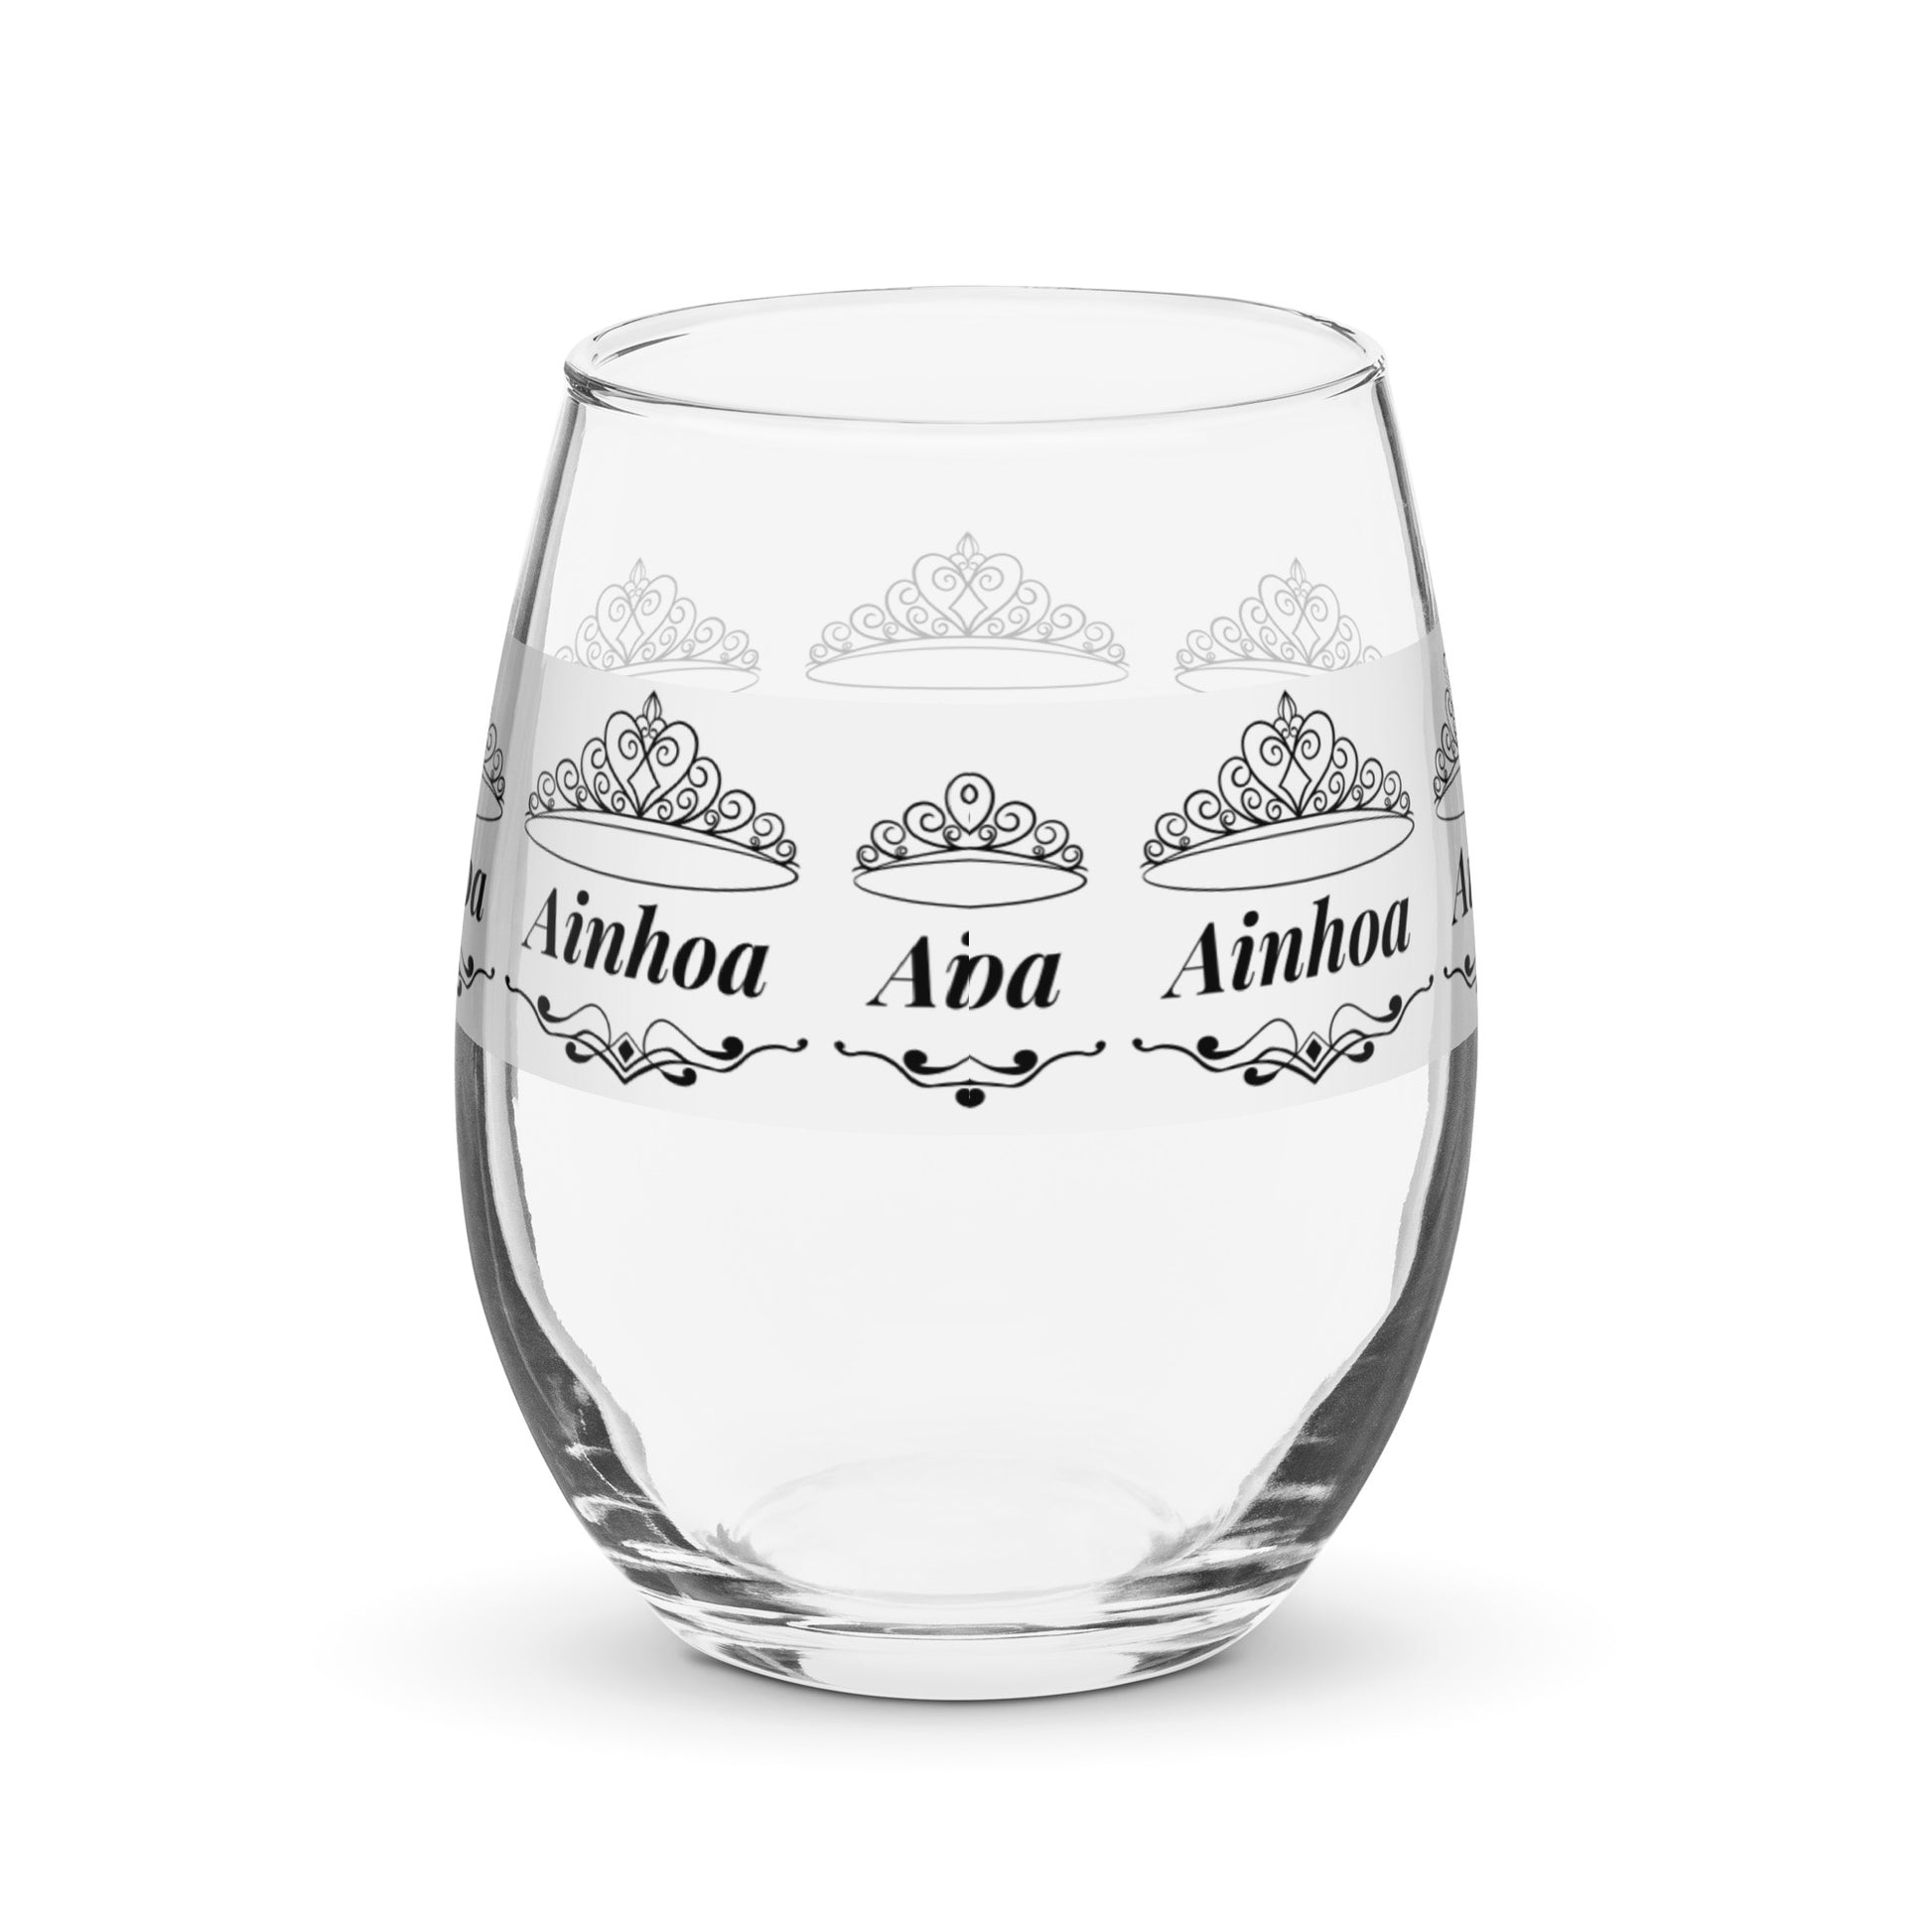 ainhoa name wine glass personalized wine glass wine glass